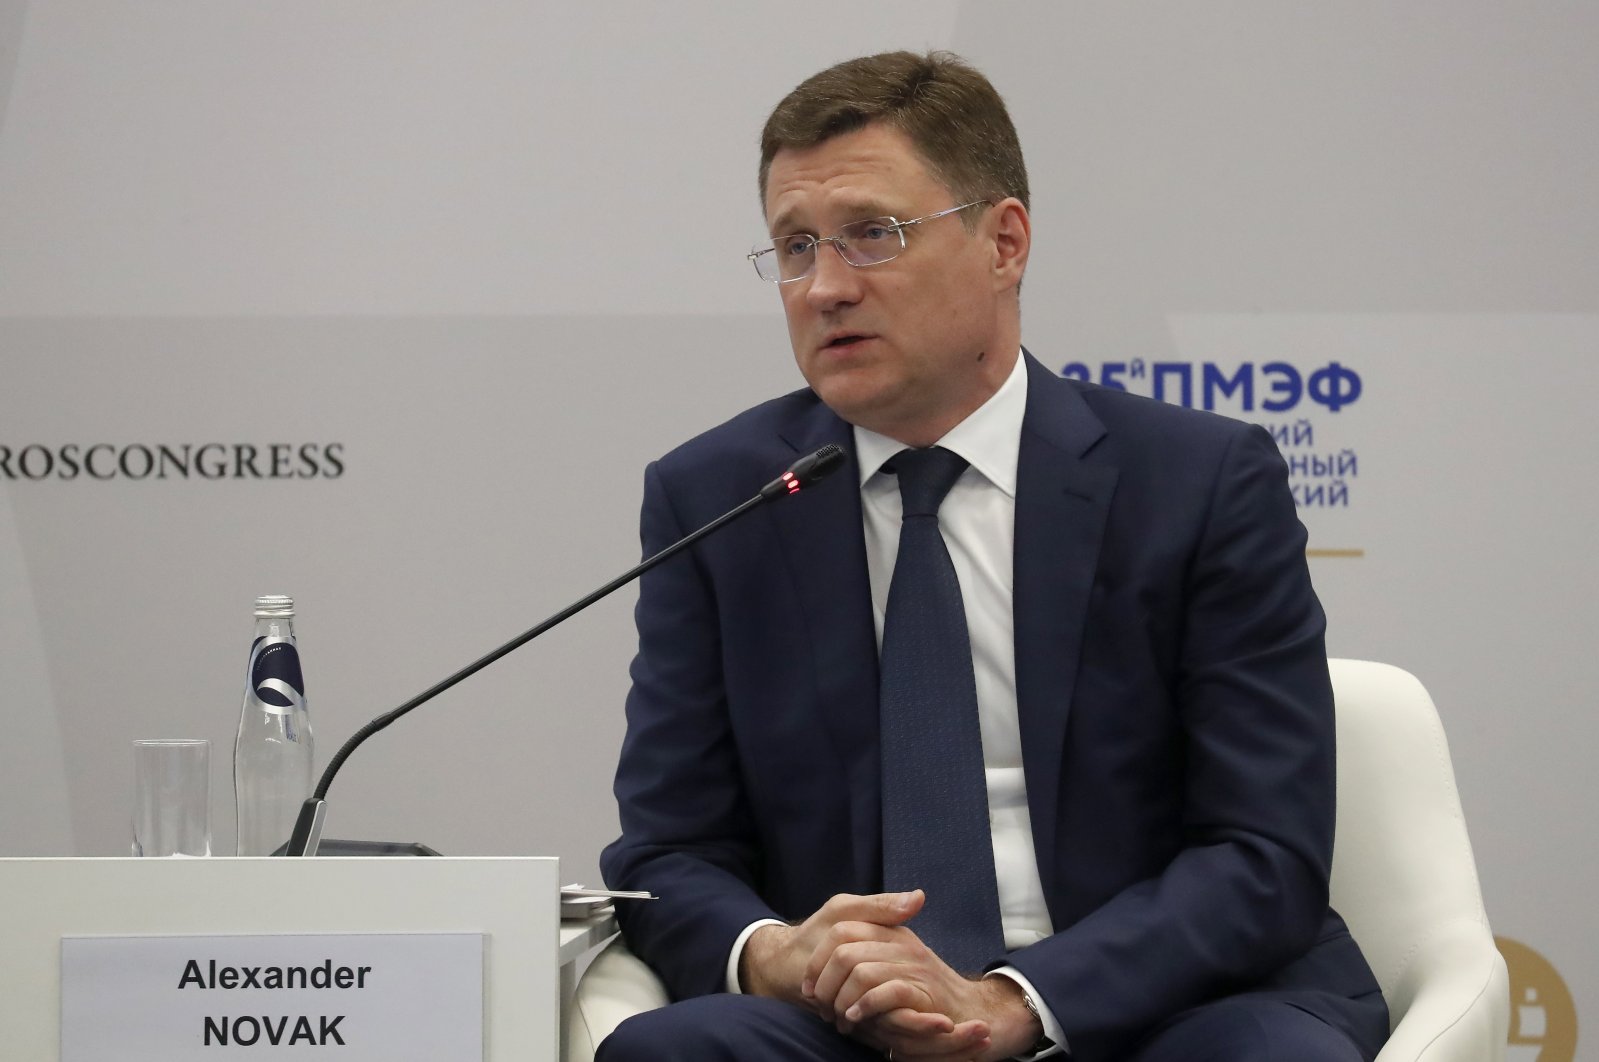 Deputy Prime Minister of Russia Alexander Novak speaks during the St. Petersburg International Economic Forum (SPIEF) in St. Petersburg, Russia, June 16, 2022. (EPA Photo)